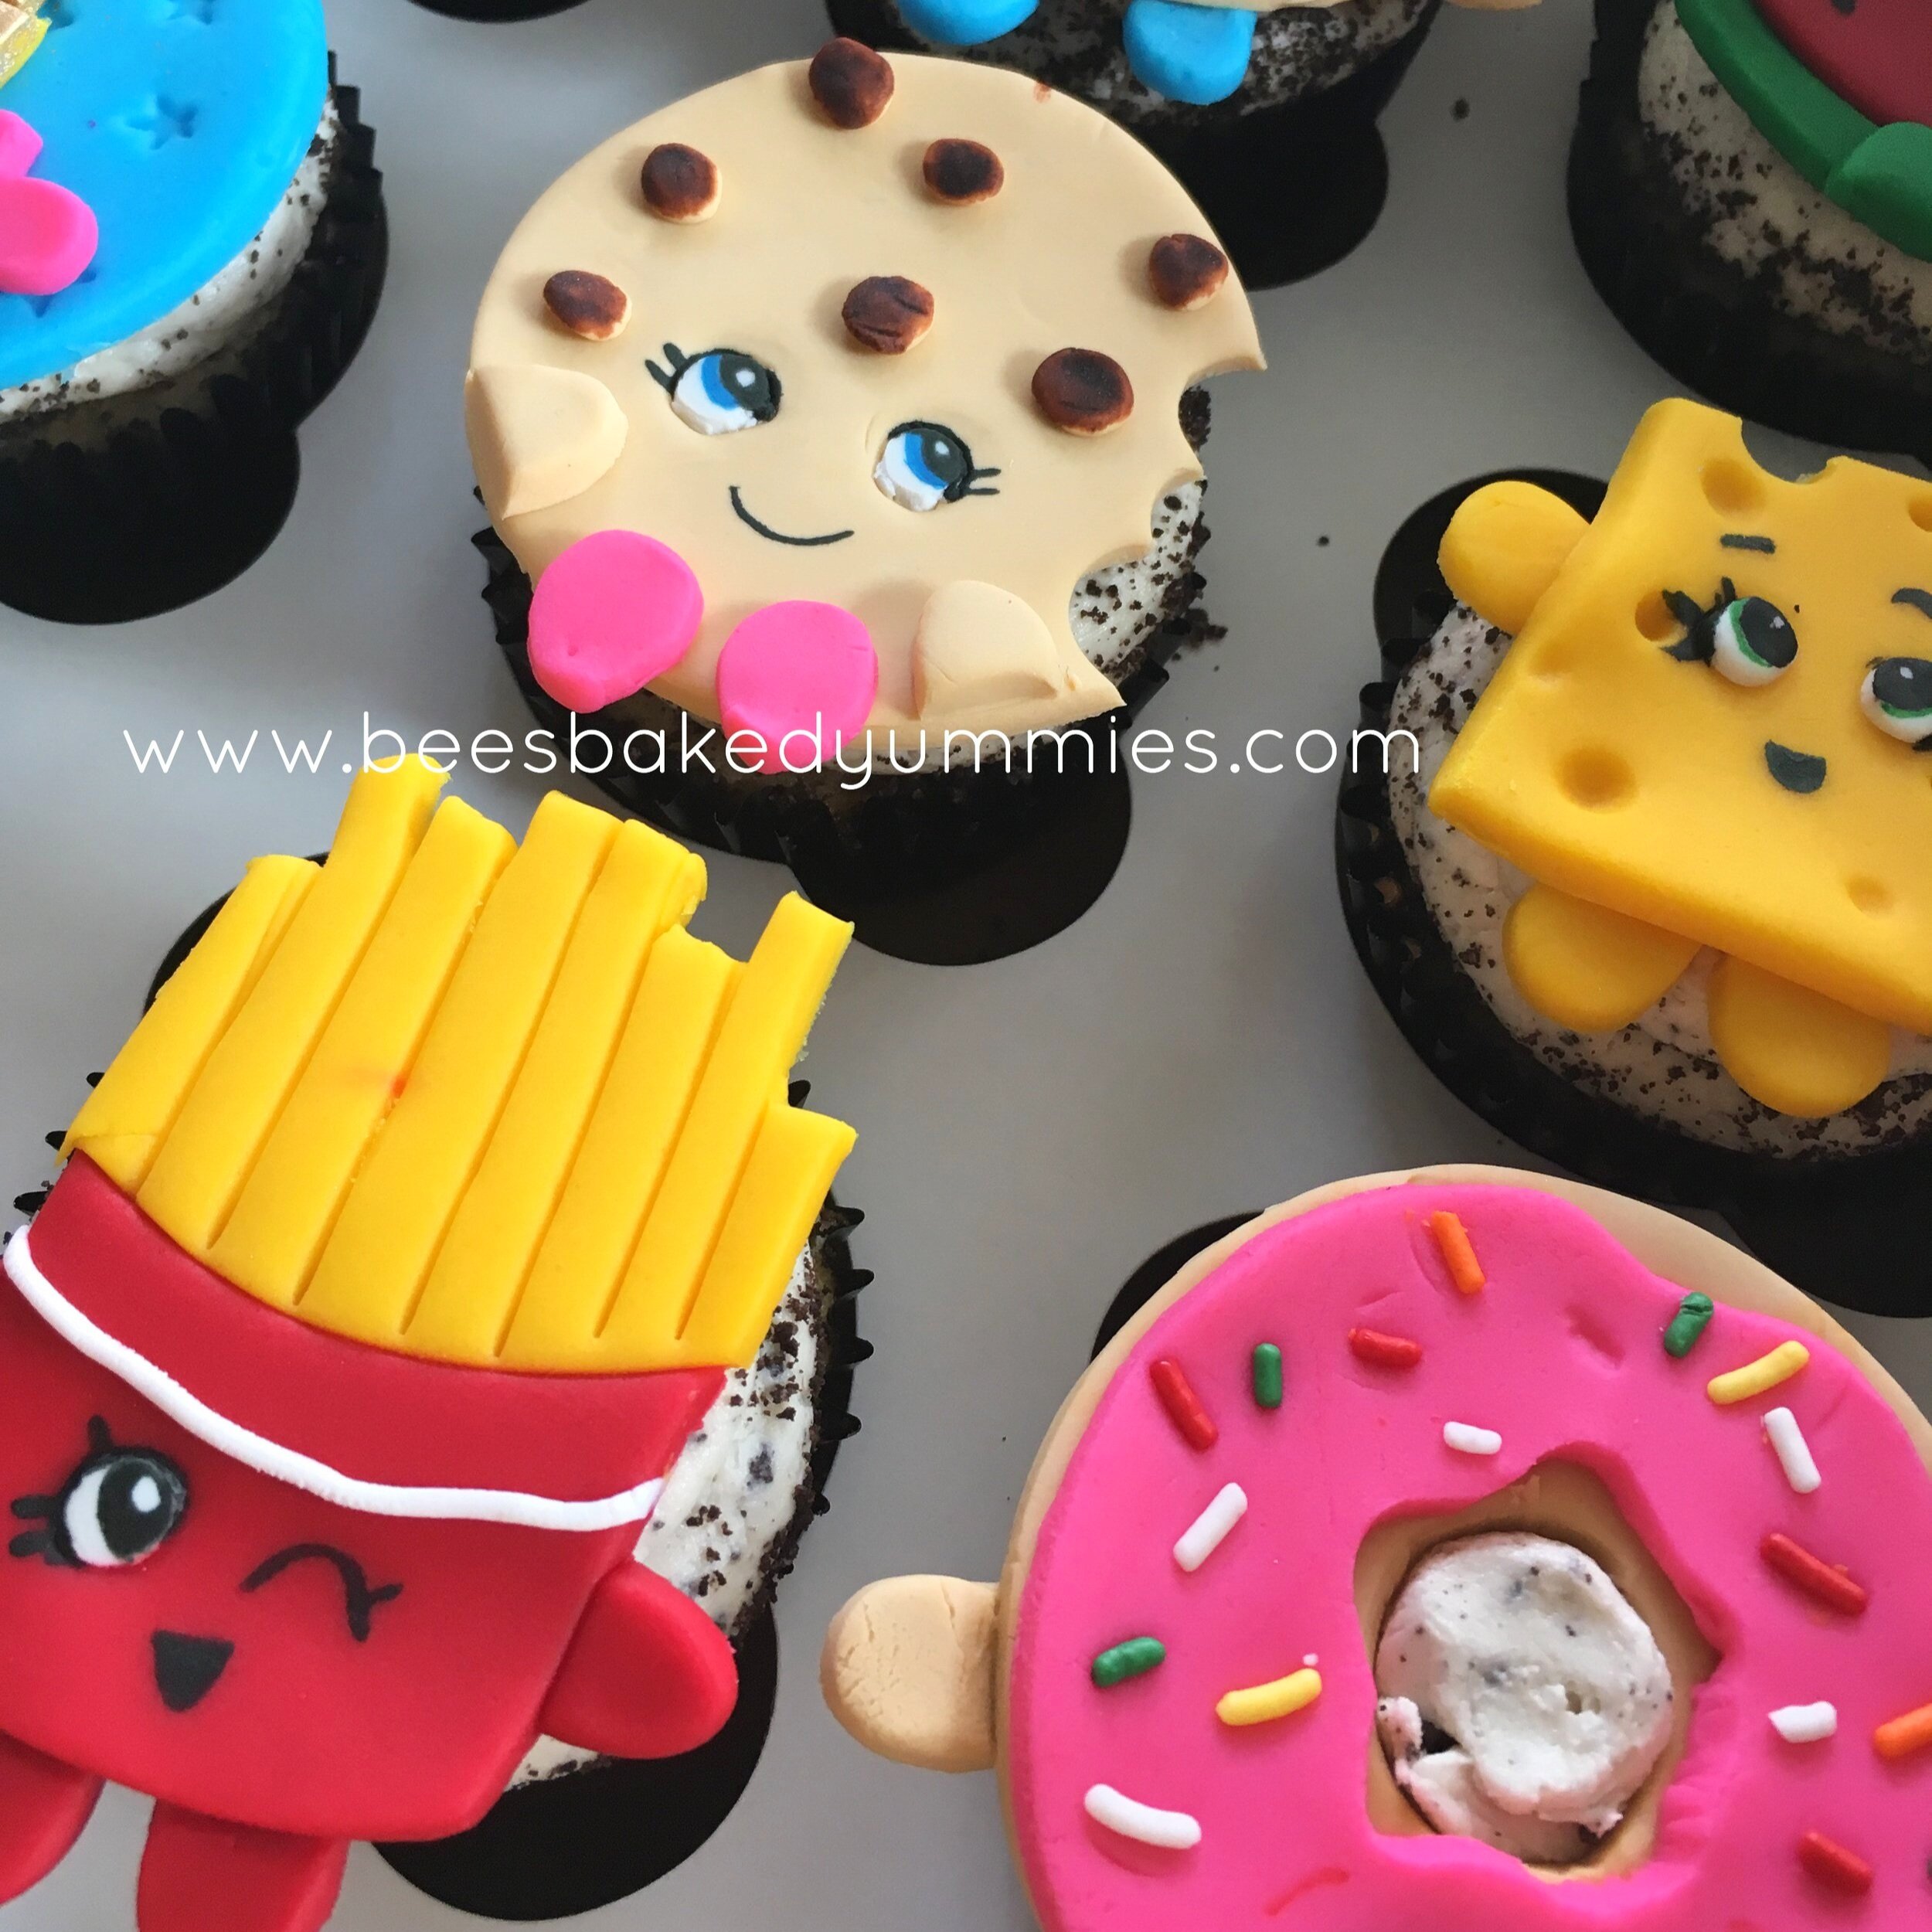 Shopkins decorated Cookies & Cream Cupcakes